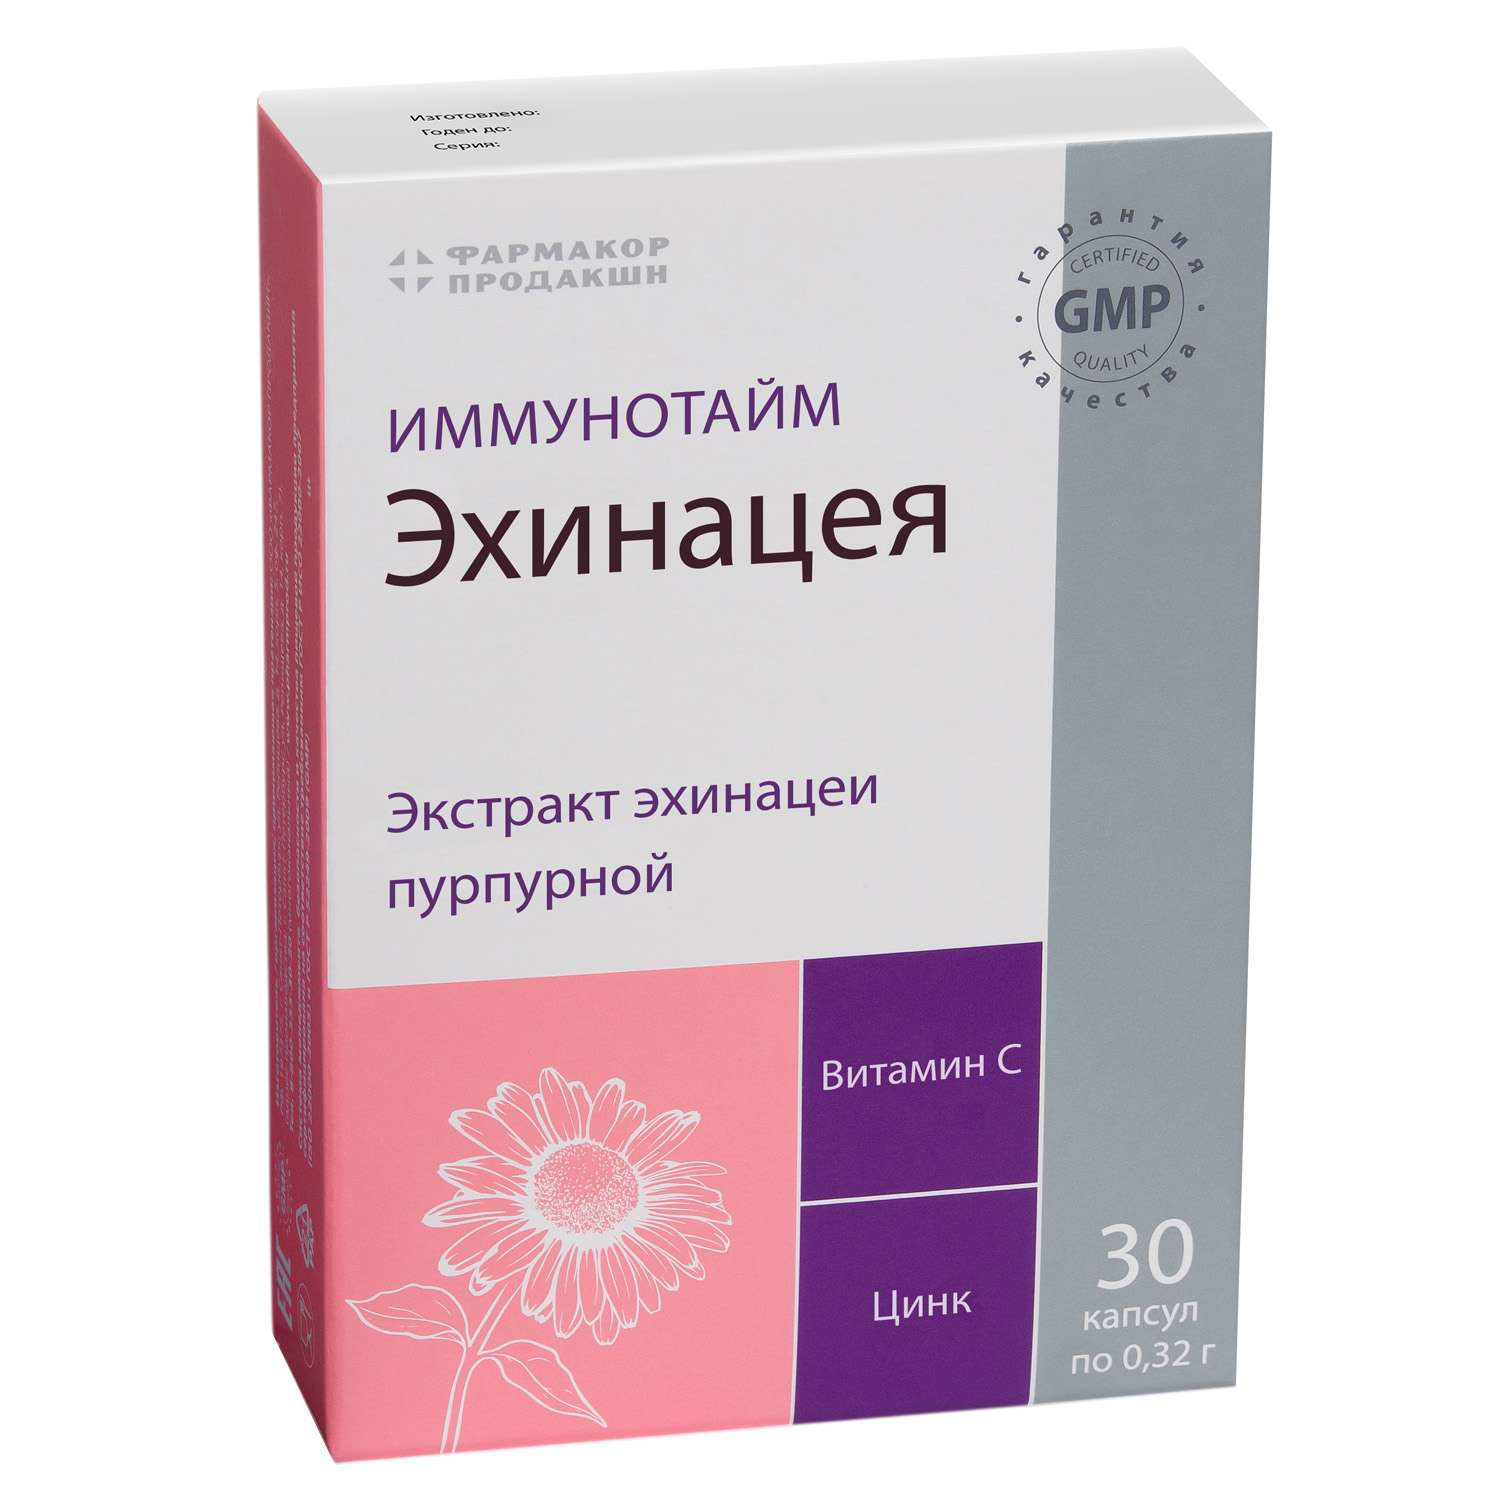 Биологически активная добавка Фармакор Продакшн Иммунотайм эхинацея с витамином с и цинком 0.32г*30капсул - фото 1